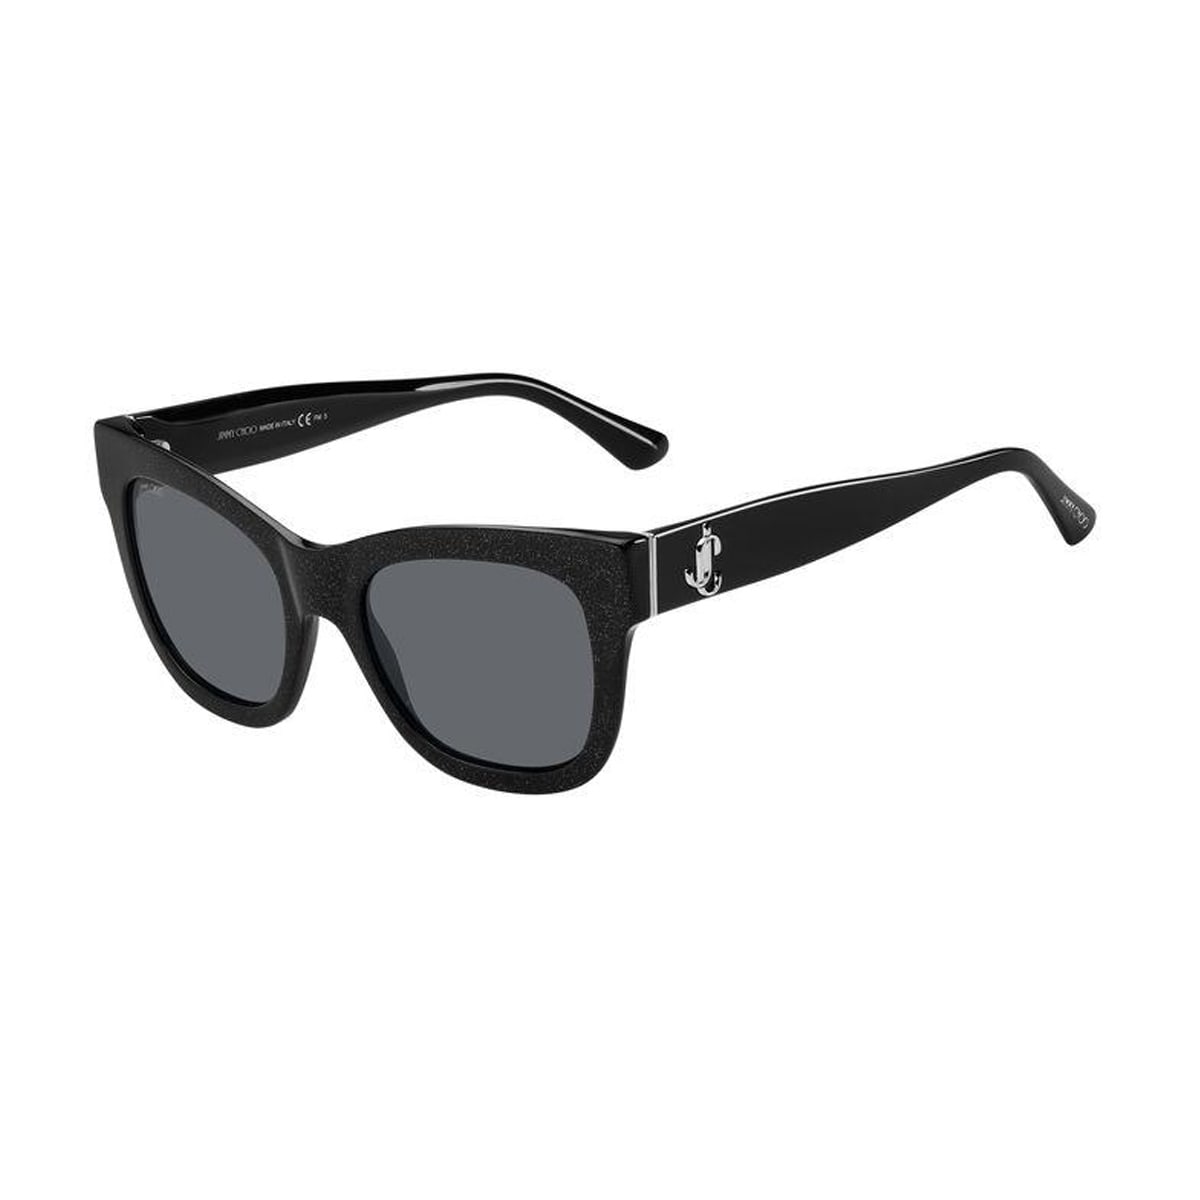 Jimmy Choo Eyewear Jan/s Sunglasses